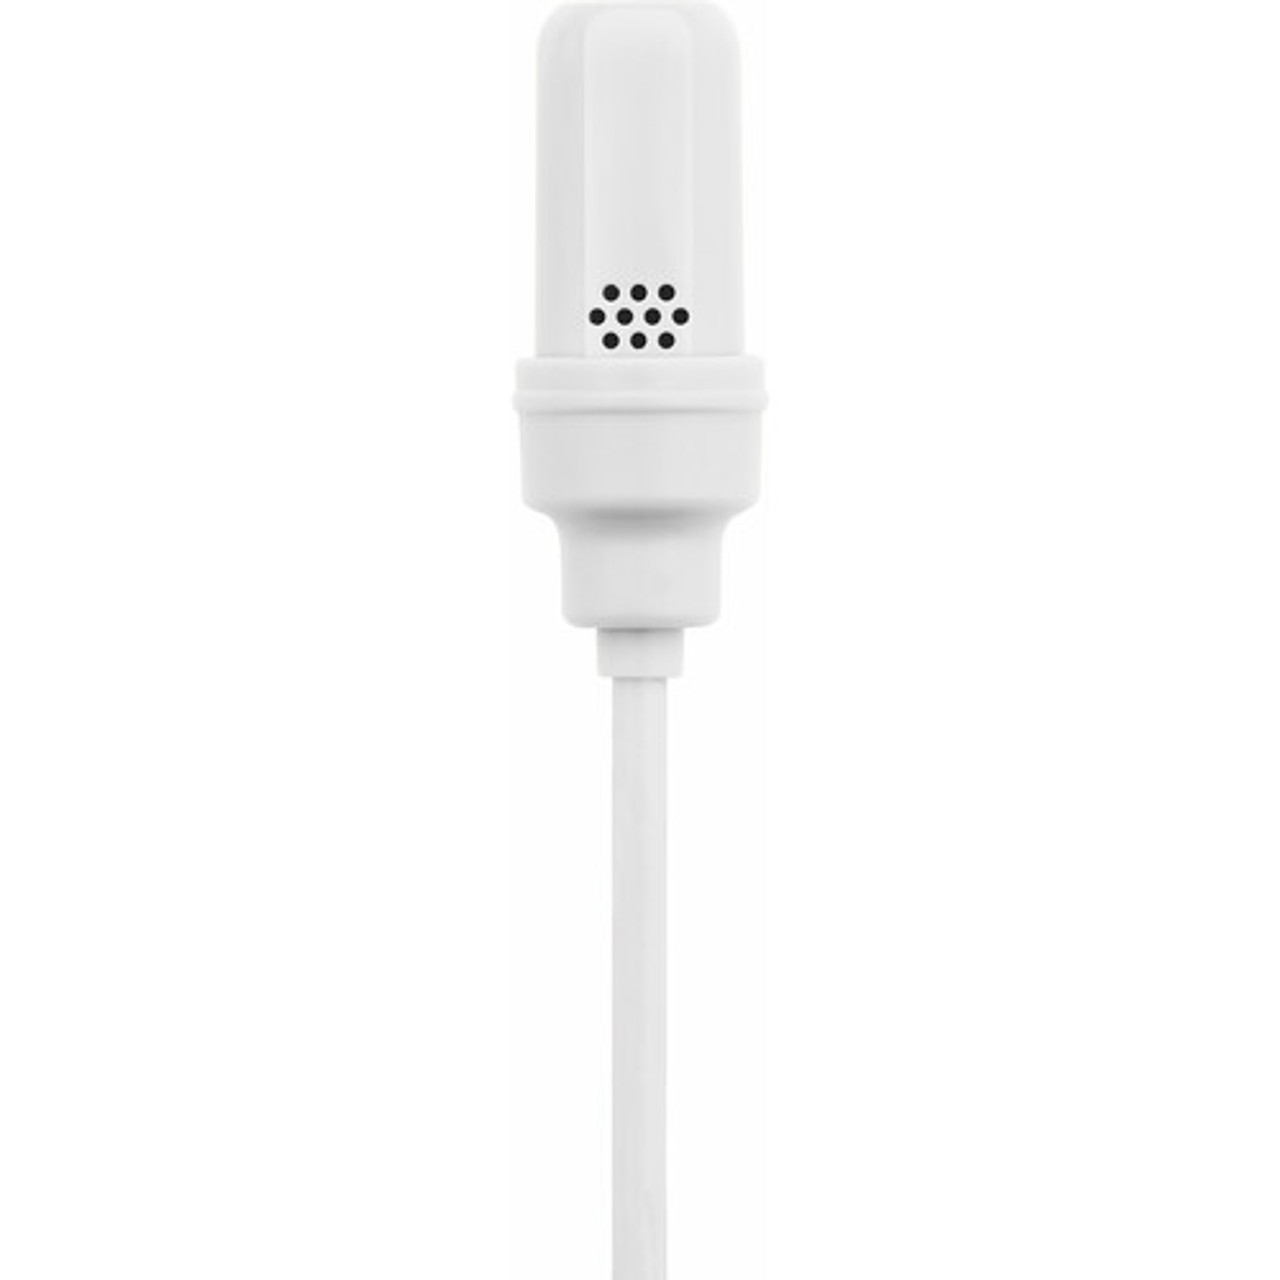 Shure UL4W/C-MTQG-A UL4 UniPlex Cardioid Subminiature Lavalier Microphone for Bodypack Transmitter (UL4W/C-MTQG-A)